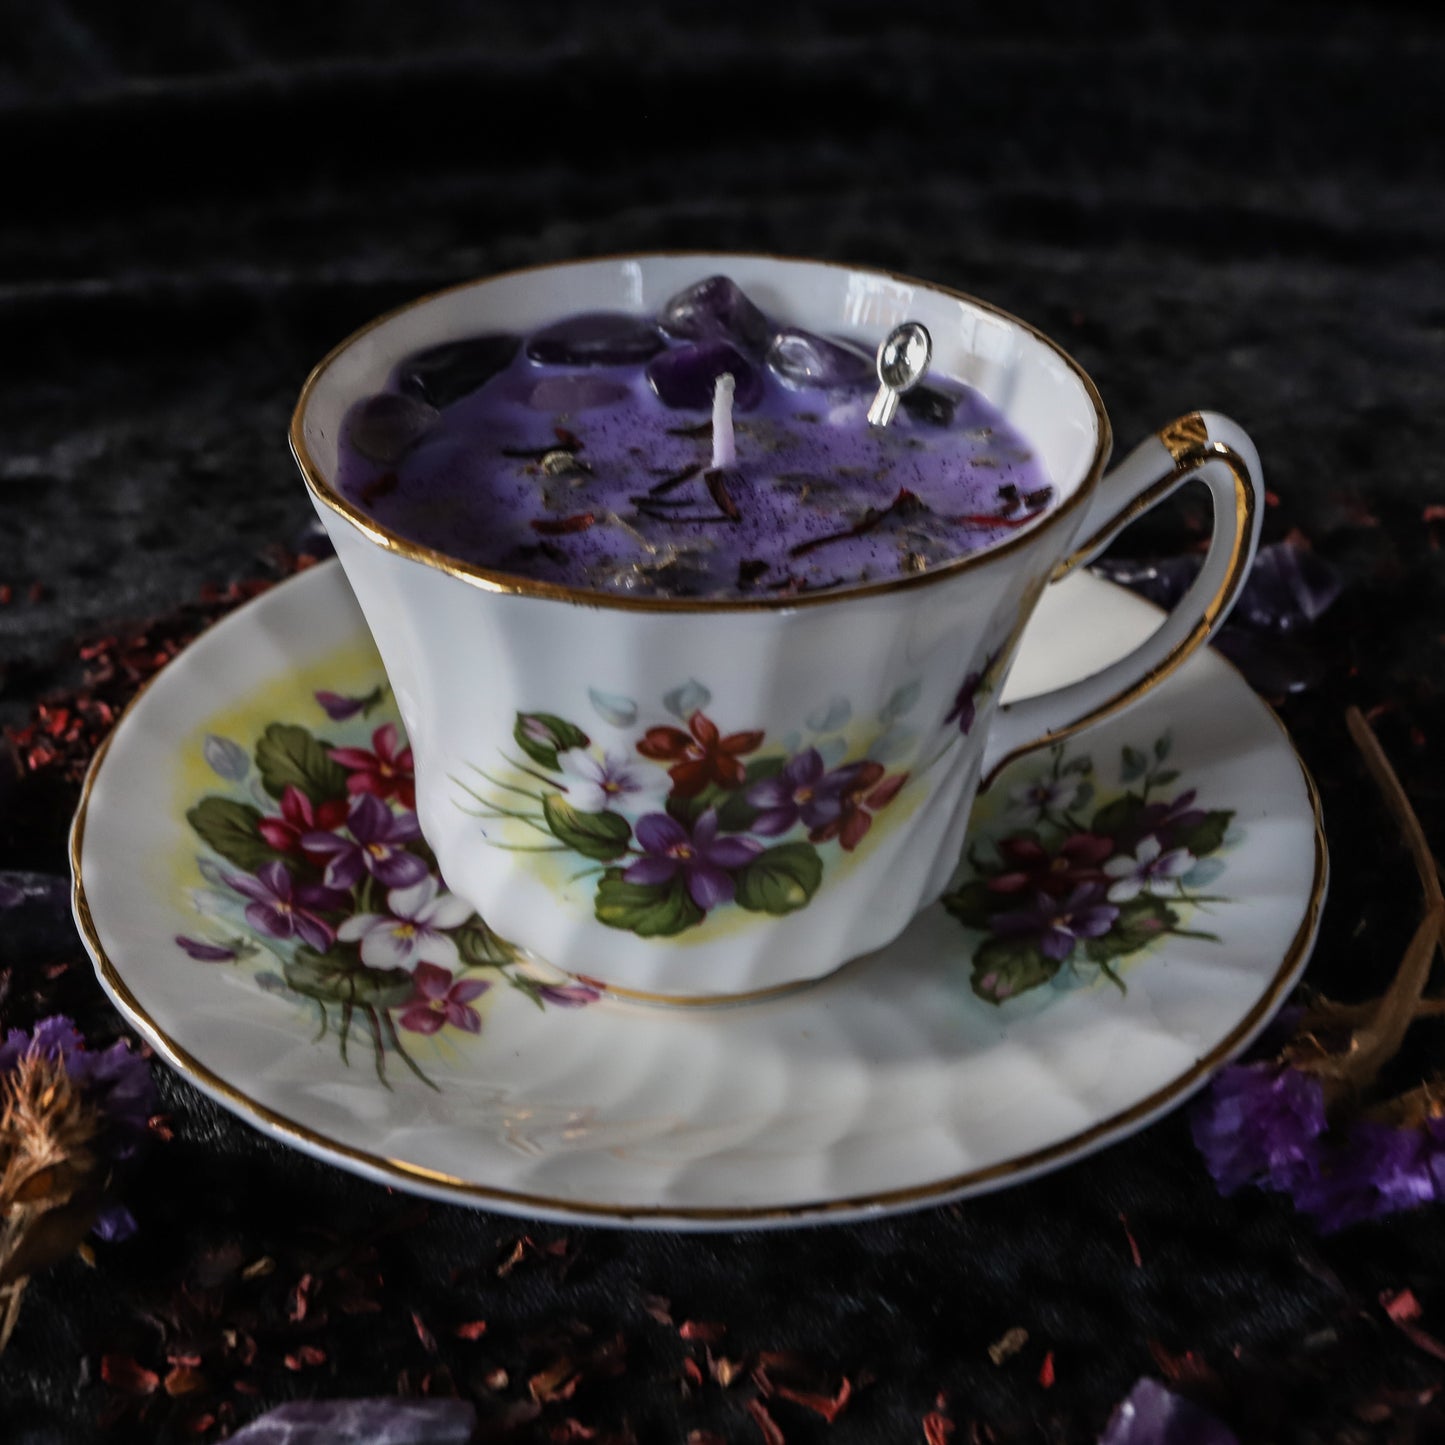 Teacup Candle of Spiritual Guidance - Lilac